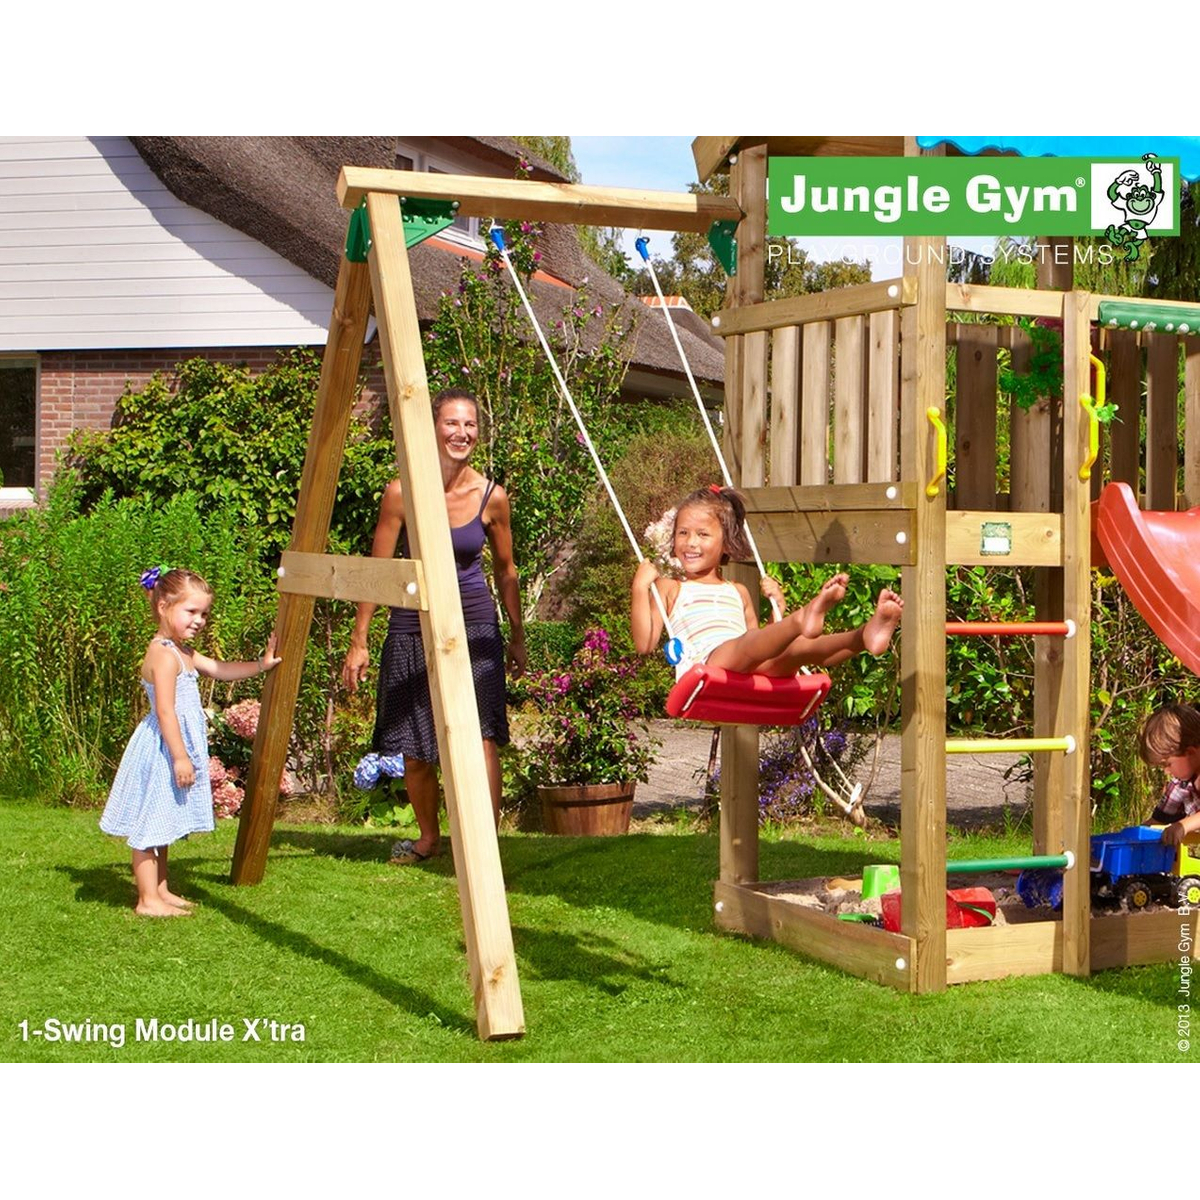 Jungle Gym 1-Swing Module X'tra